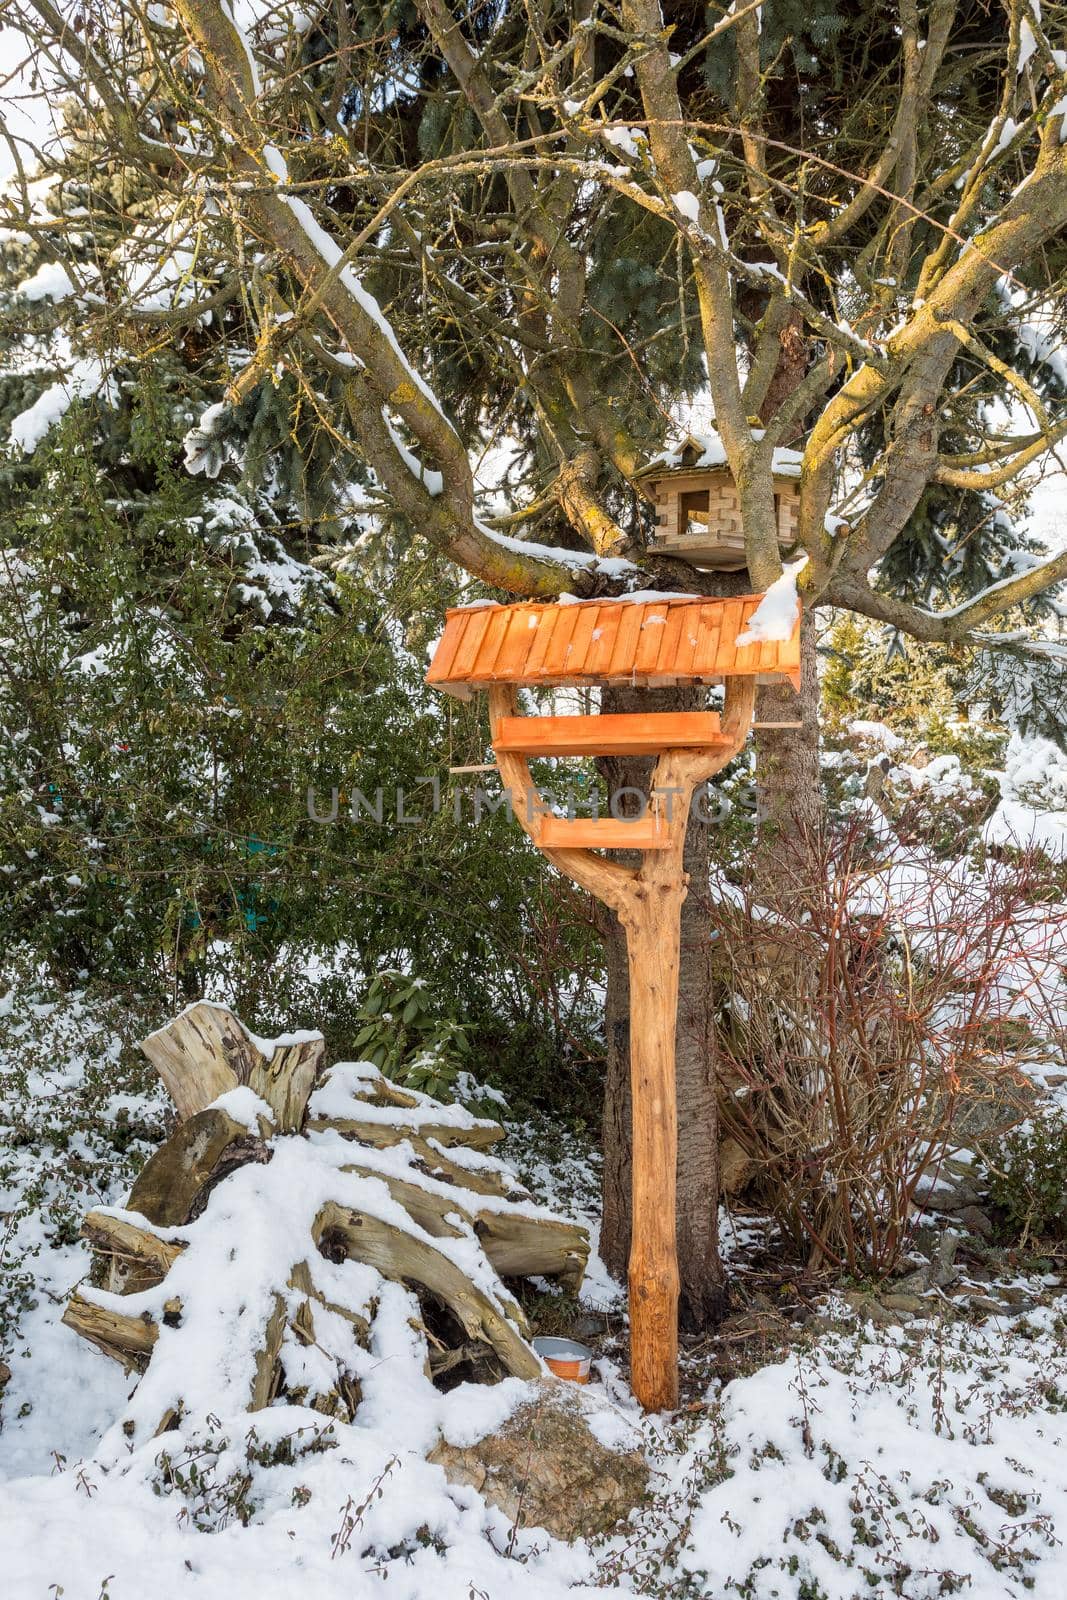 homemade wooden birdhouse or feeder installed on winter garden in snowy day